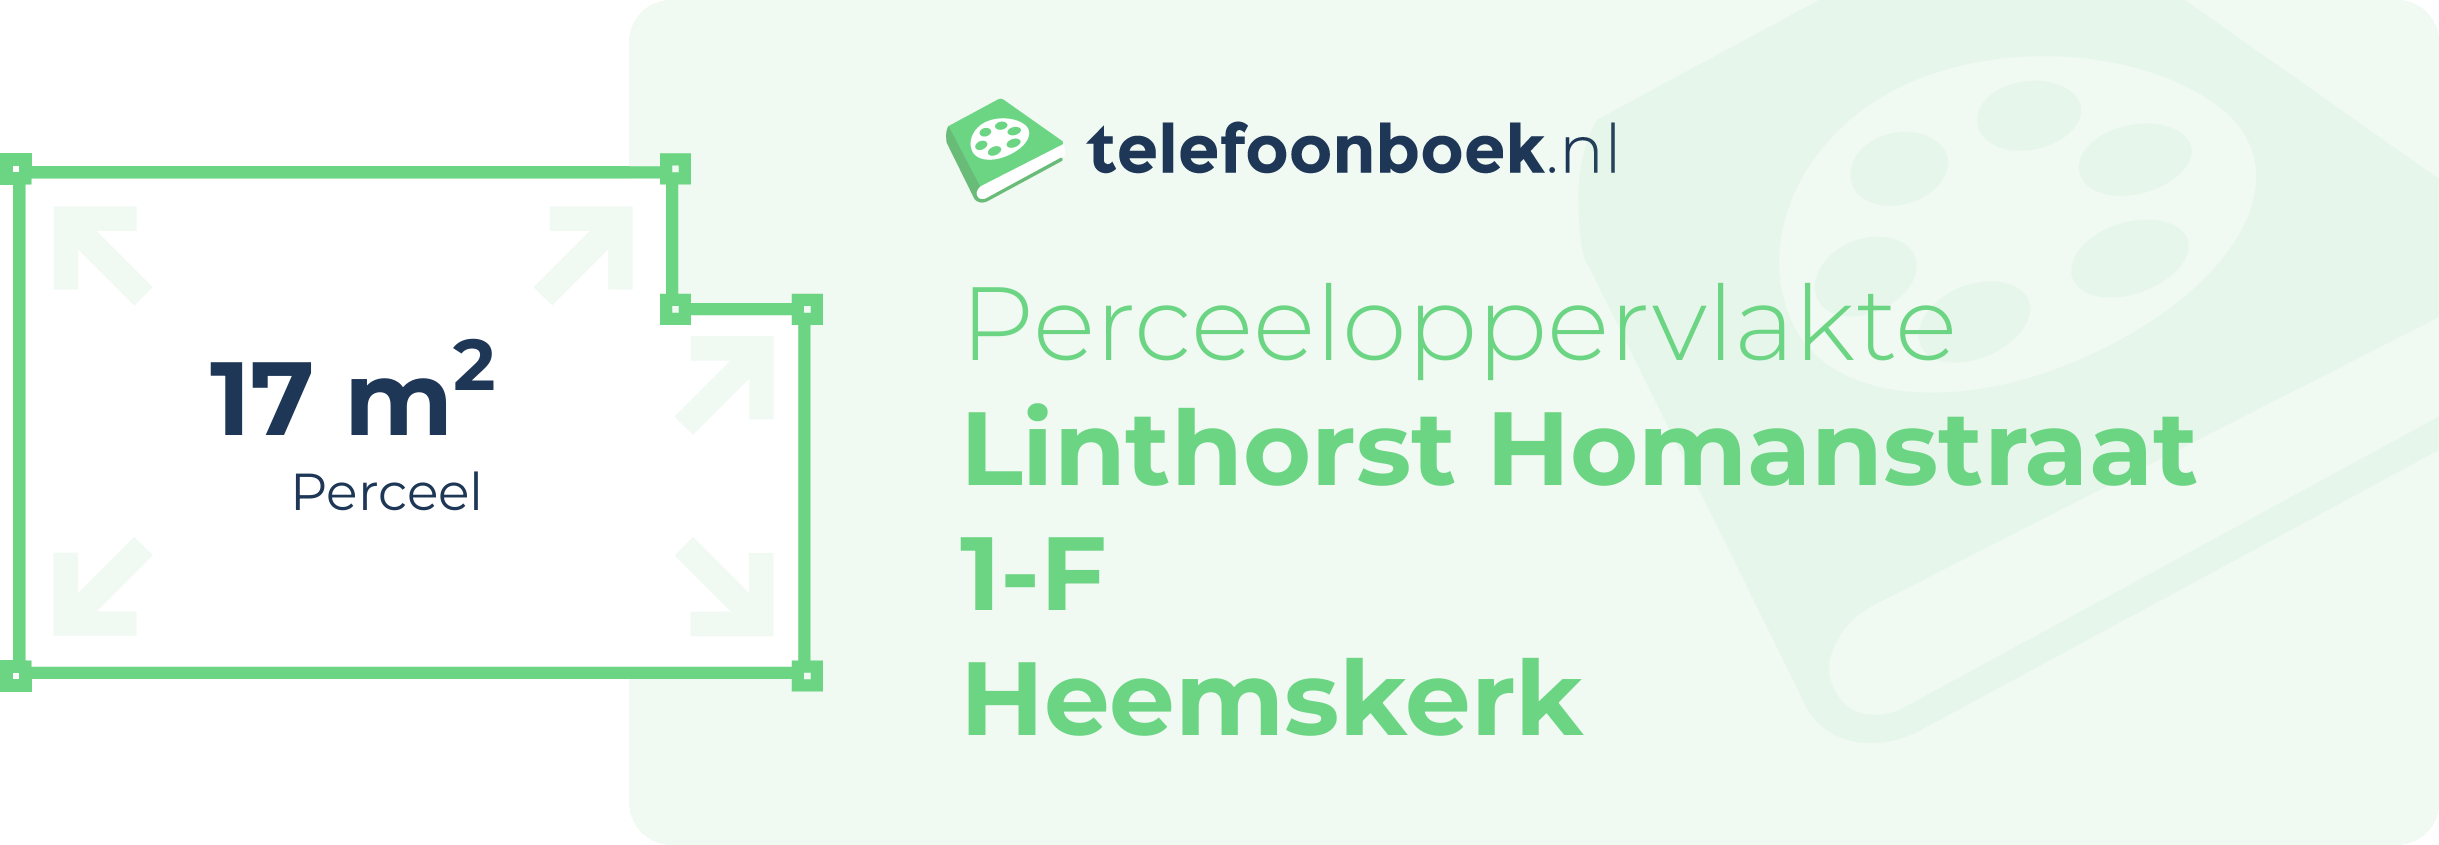 Perceeloppervlakte Linthorst Homanstraat 1-F Heemskerk